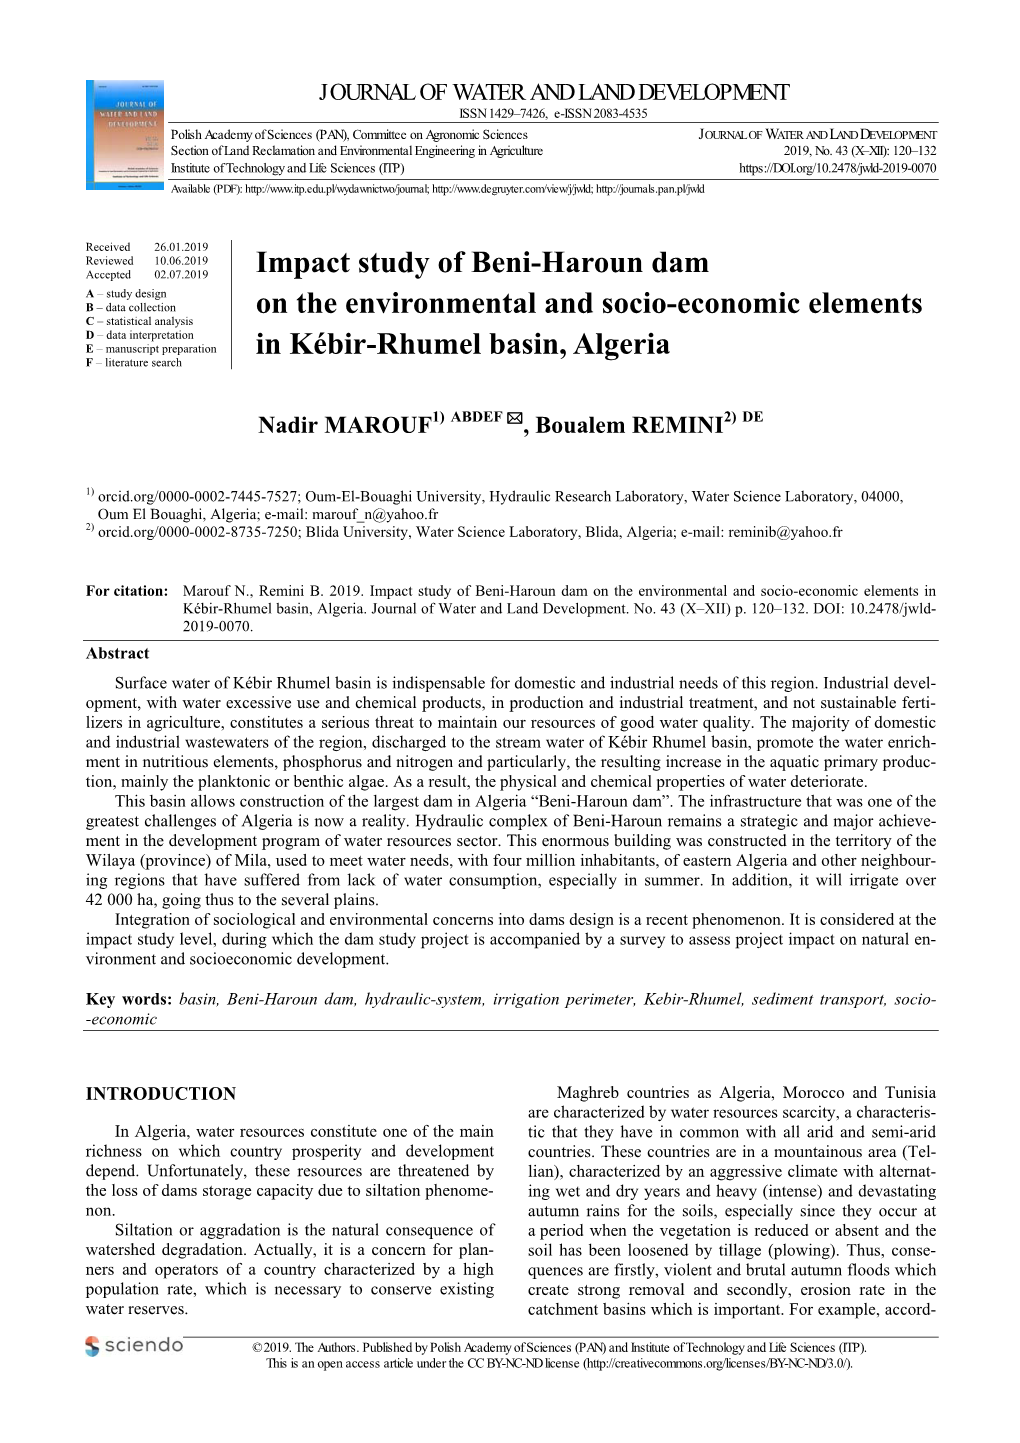 Impact Study of Beni-Haroun Dam on the Environmental and Socio-Economic Elements in Kébir-Rhumel Basin, Algeria